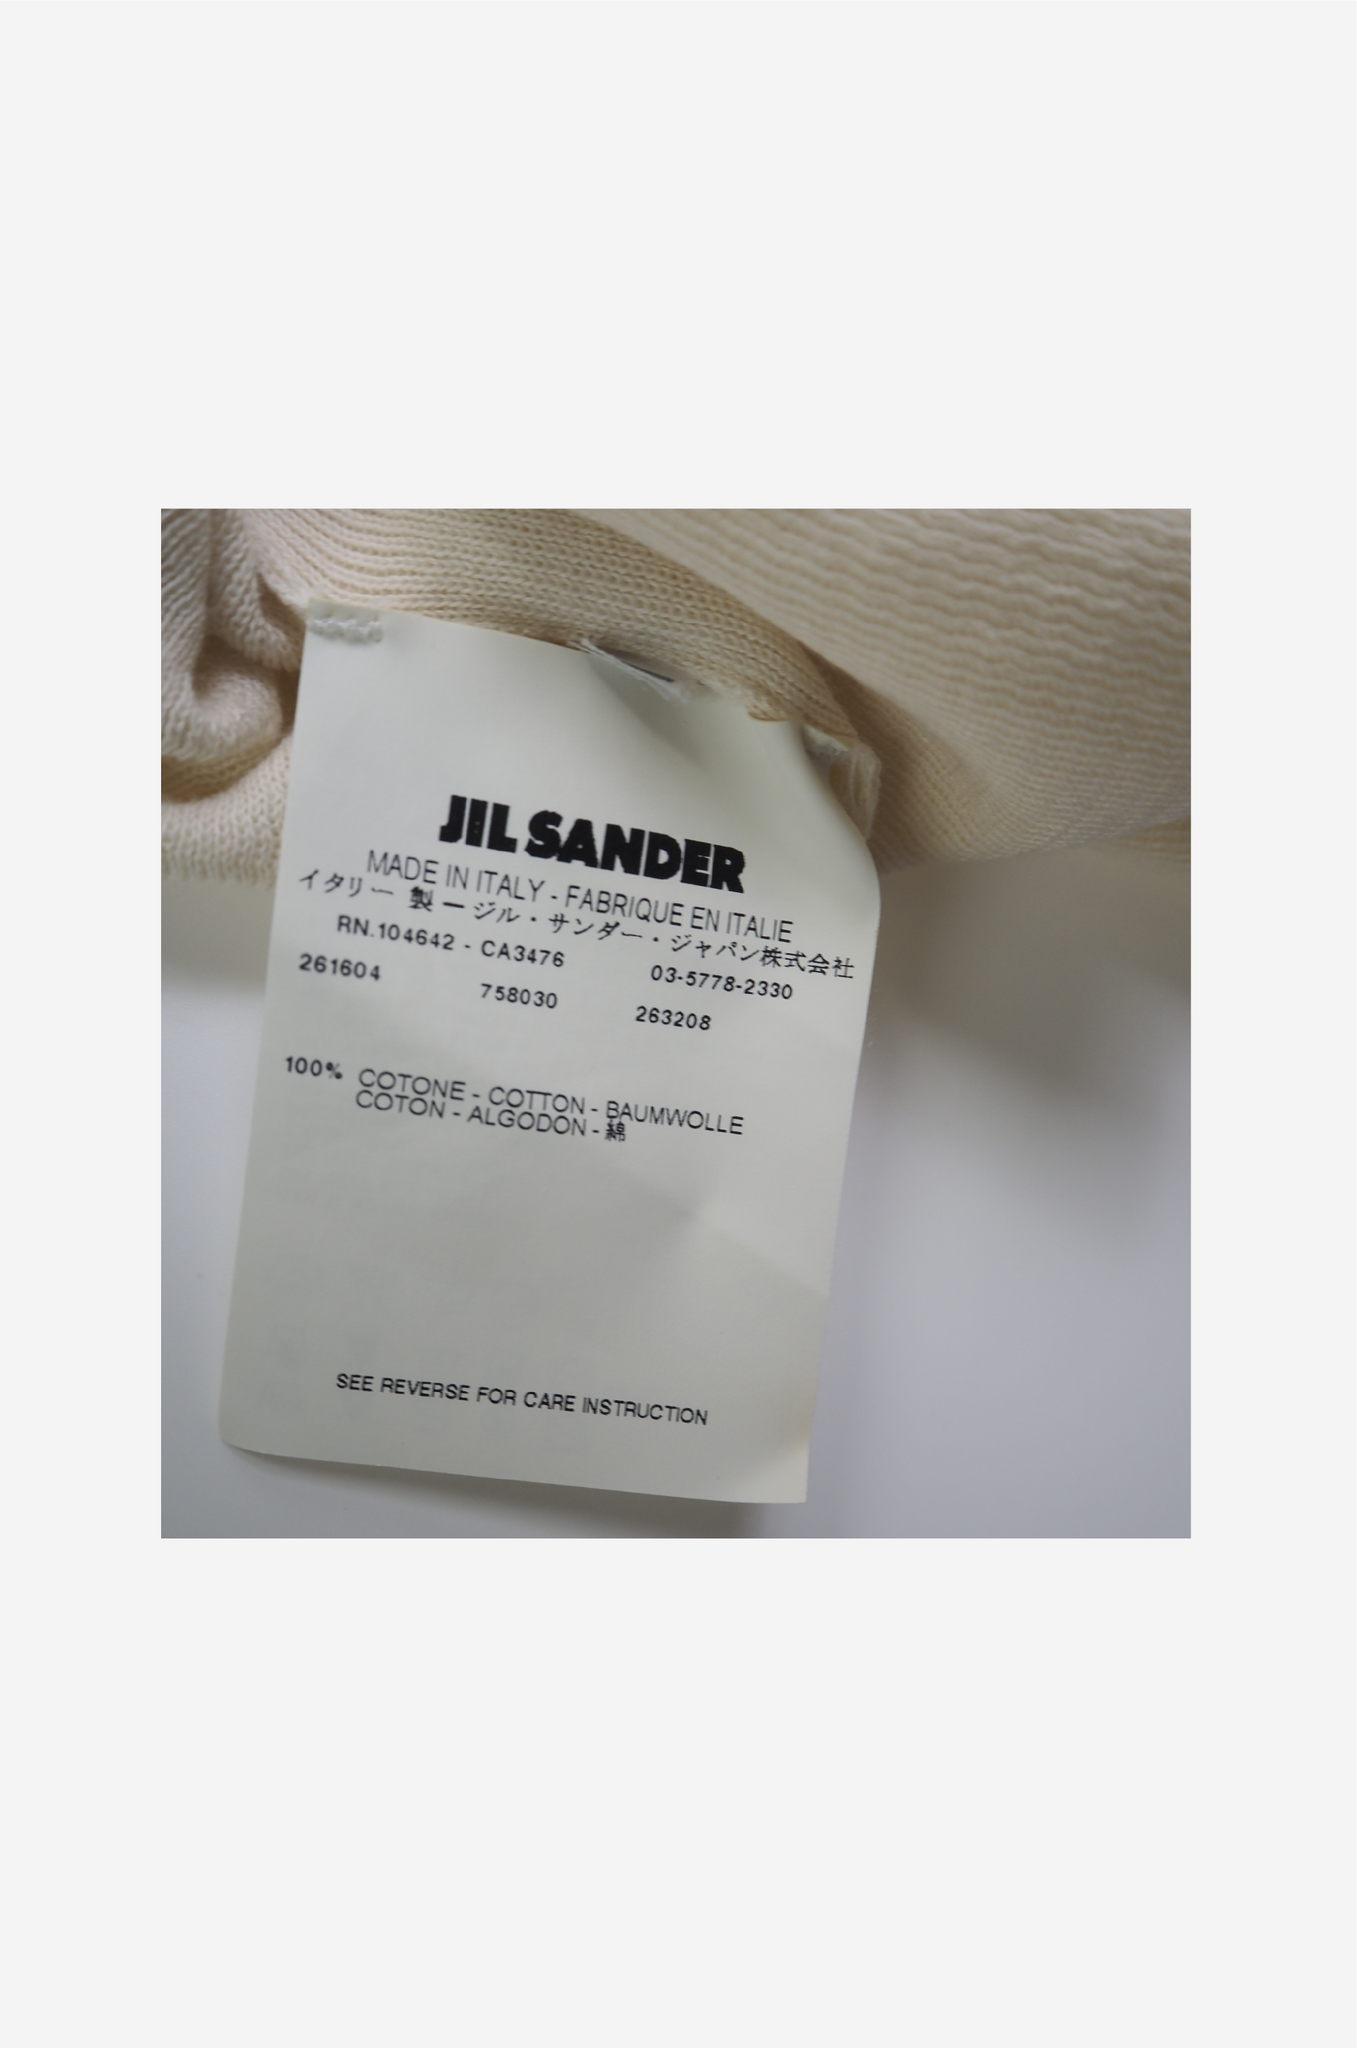 Archives Room: JIL SANDER T-shirt